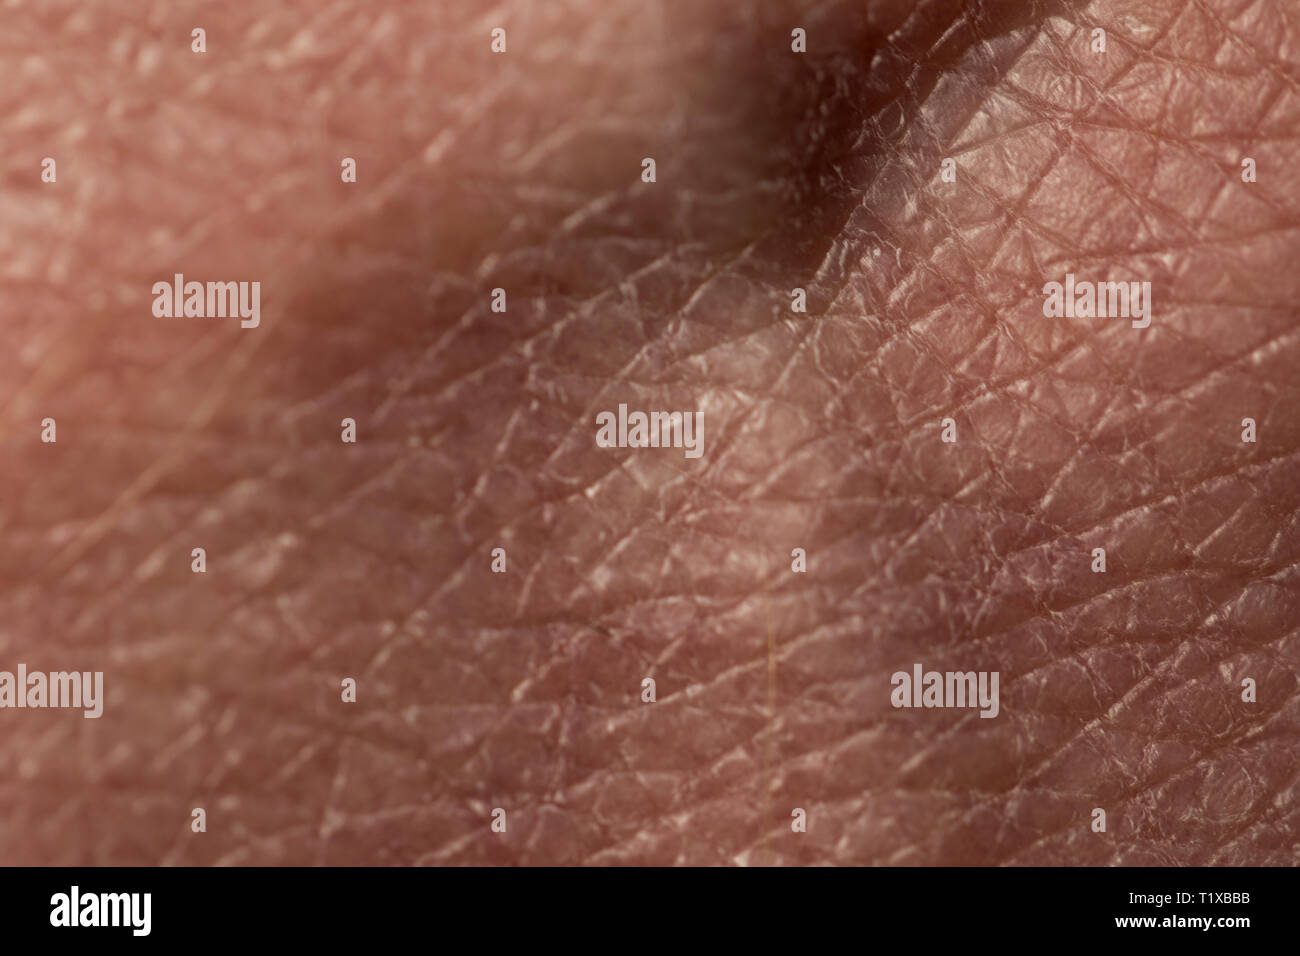 Skin close up. Dry human skin under microscope with eczema damage. Cracked  dry skin damage Stock Photo - Alamy